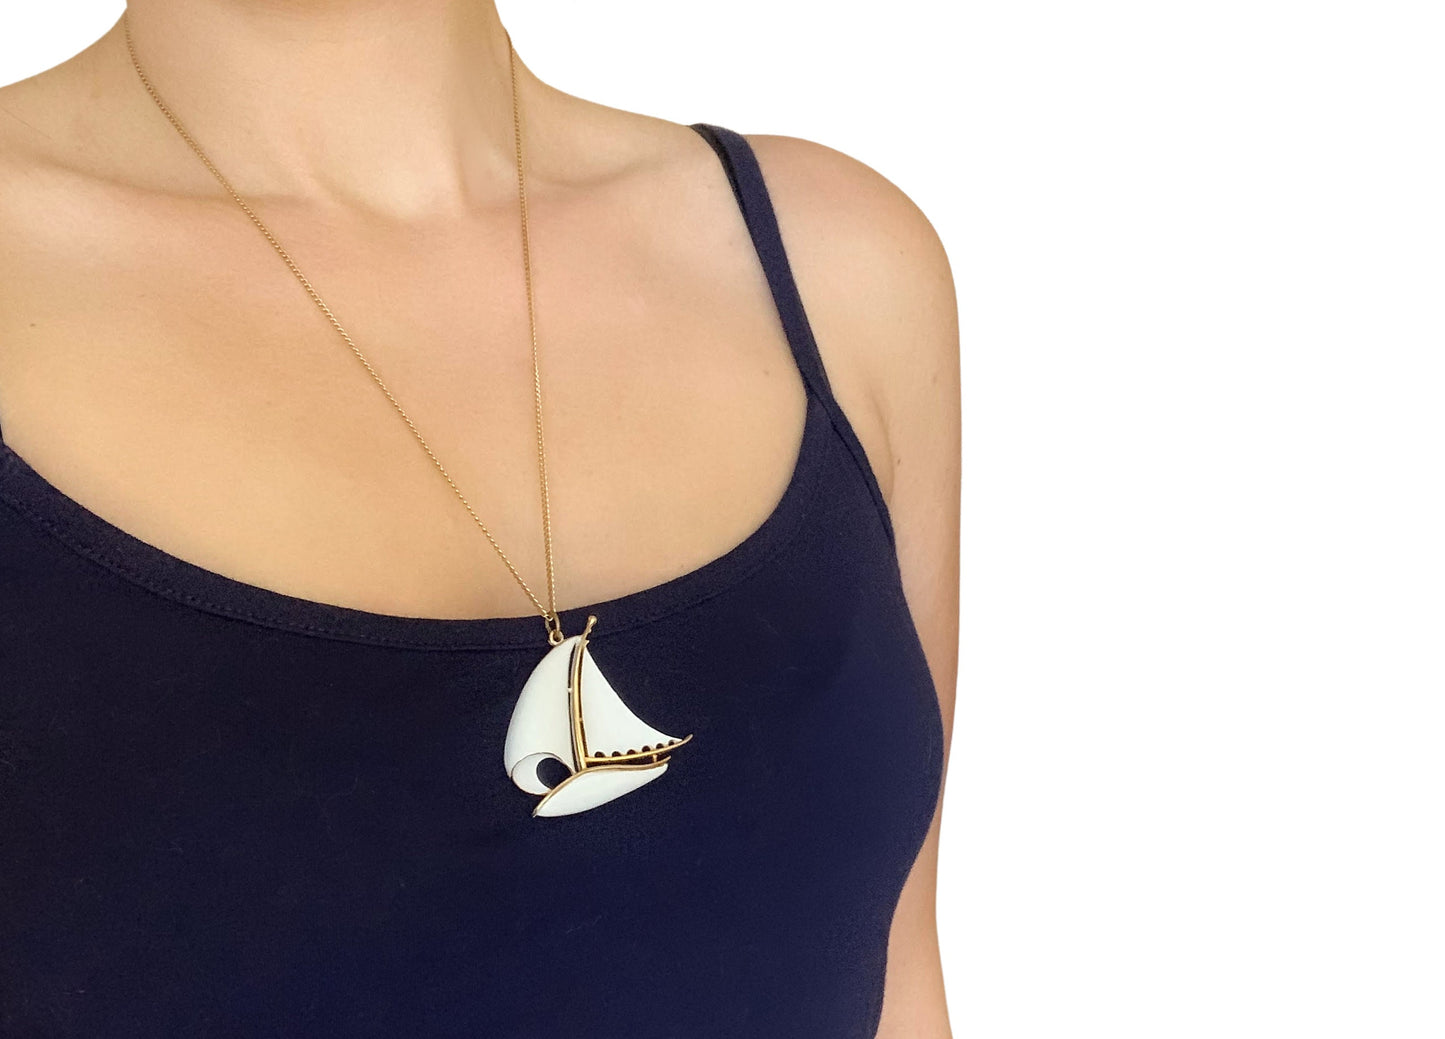 Vintage Sailboat Necklace, White Enamel and Gold Pendant Necklace, Unisex Sea Boat Charm Pendant, Unique Nautical Sailing Boating Necklace